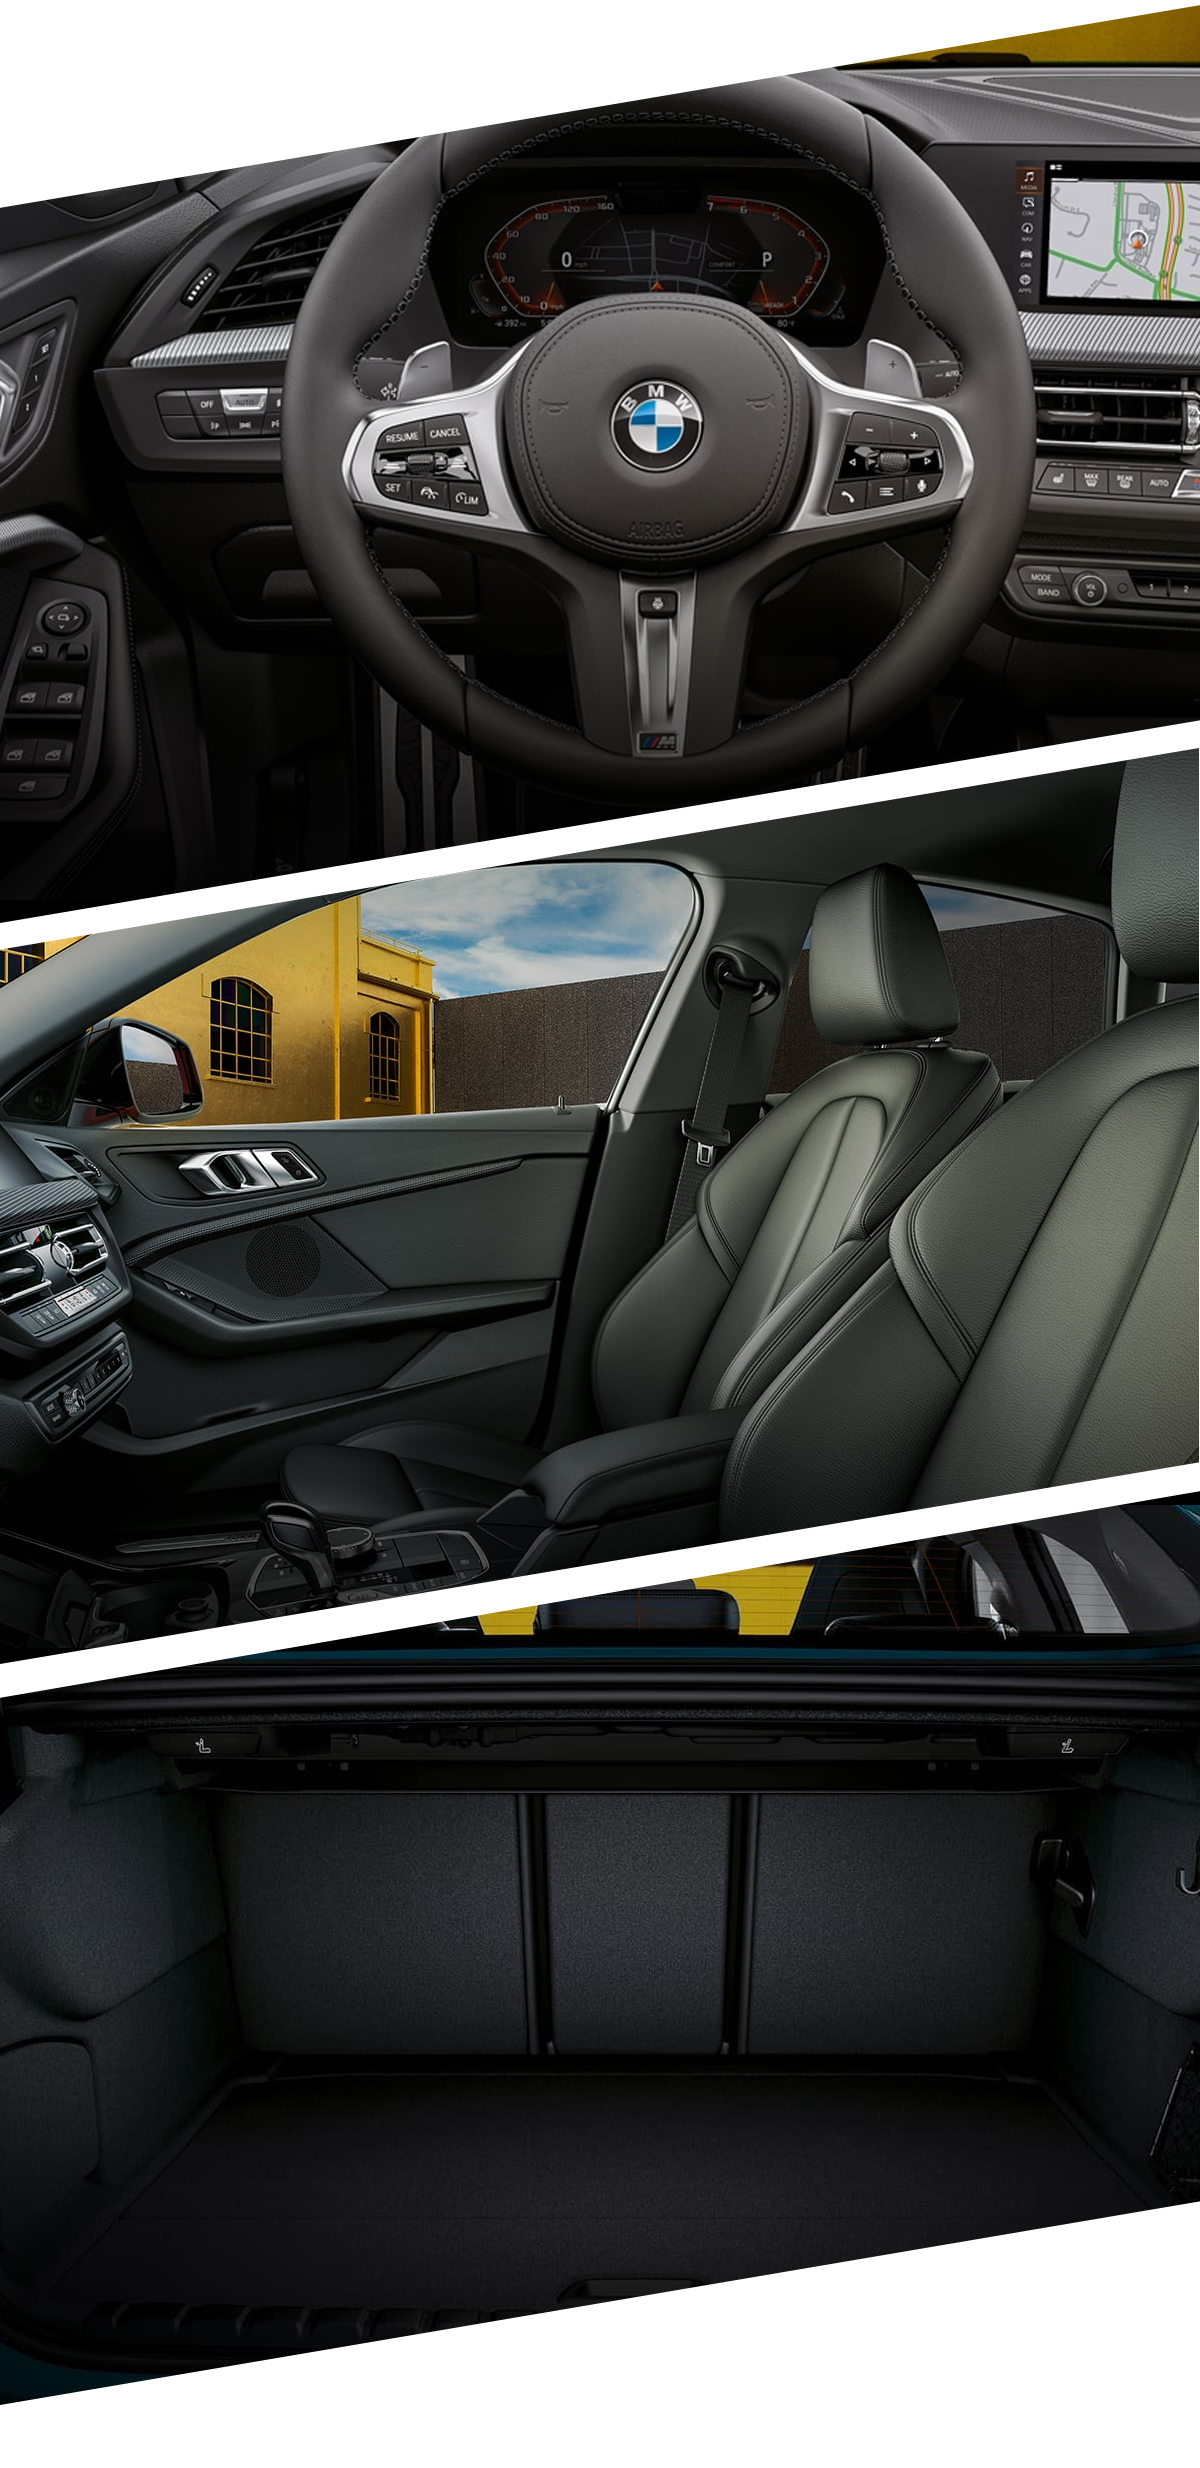 2021 BMW 2 Series Interior Images